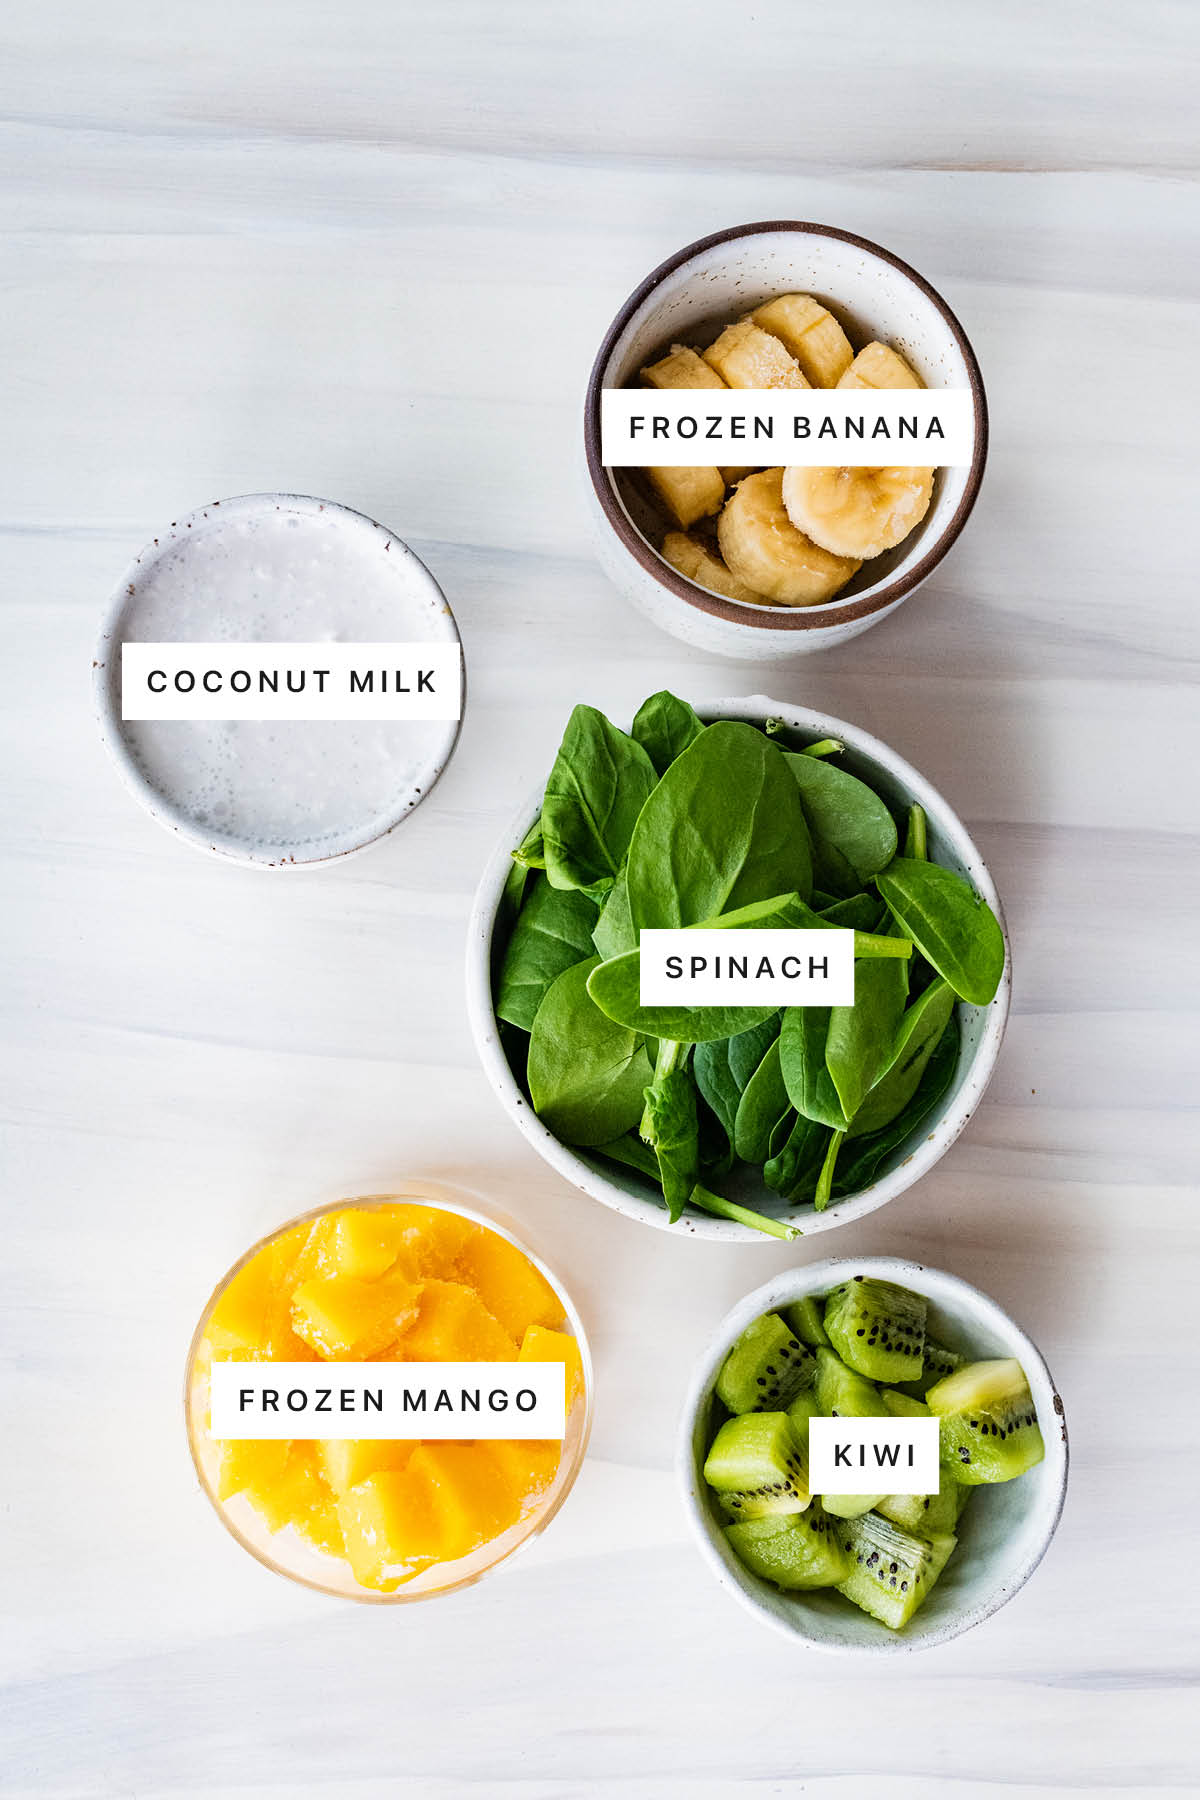 Measured ingredients to make a Kiwi Smoothie: frozen banana, coconut milk, spinach, frozen mango and kiwi.